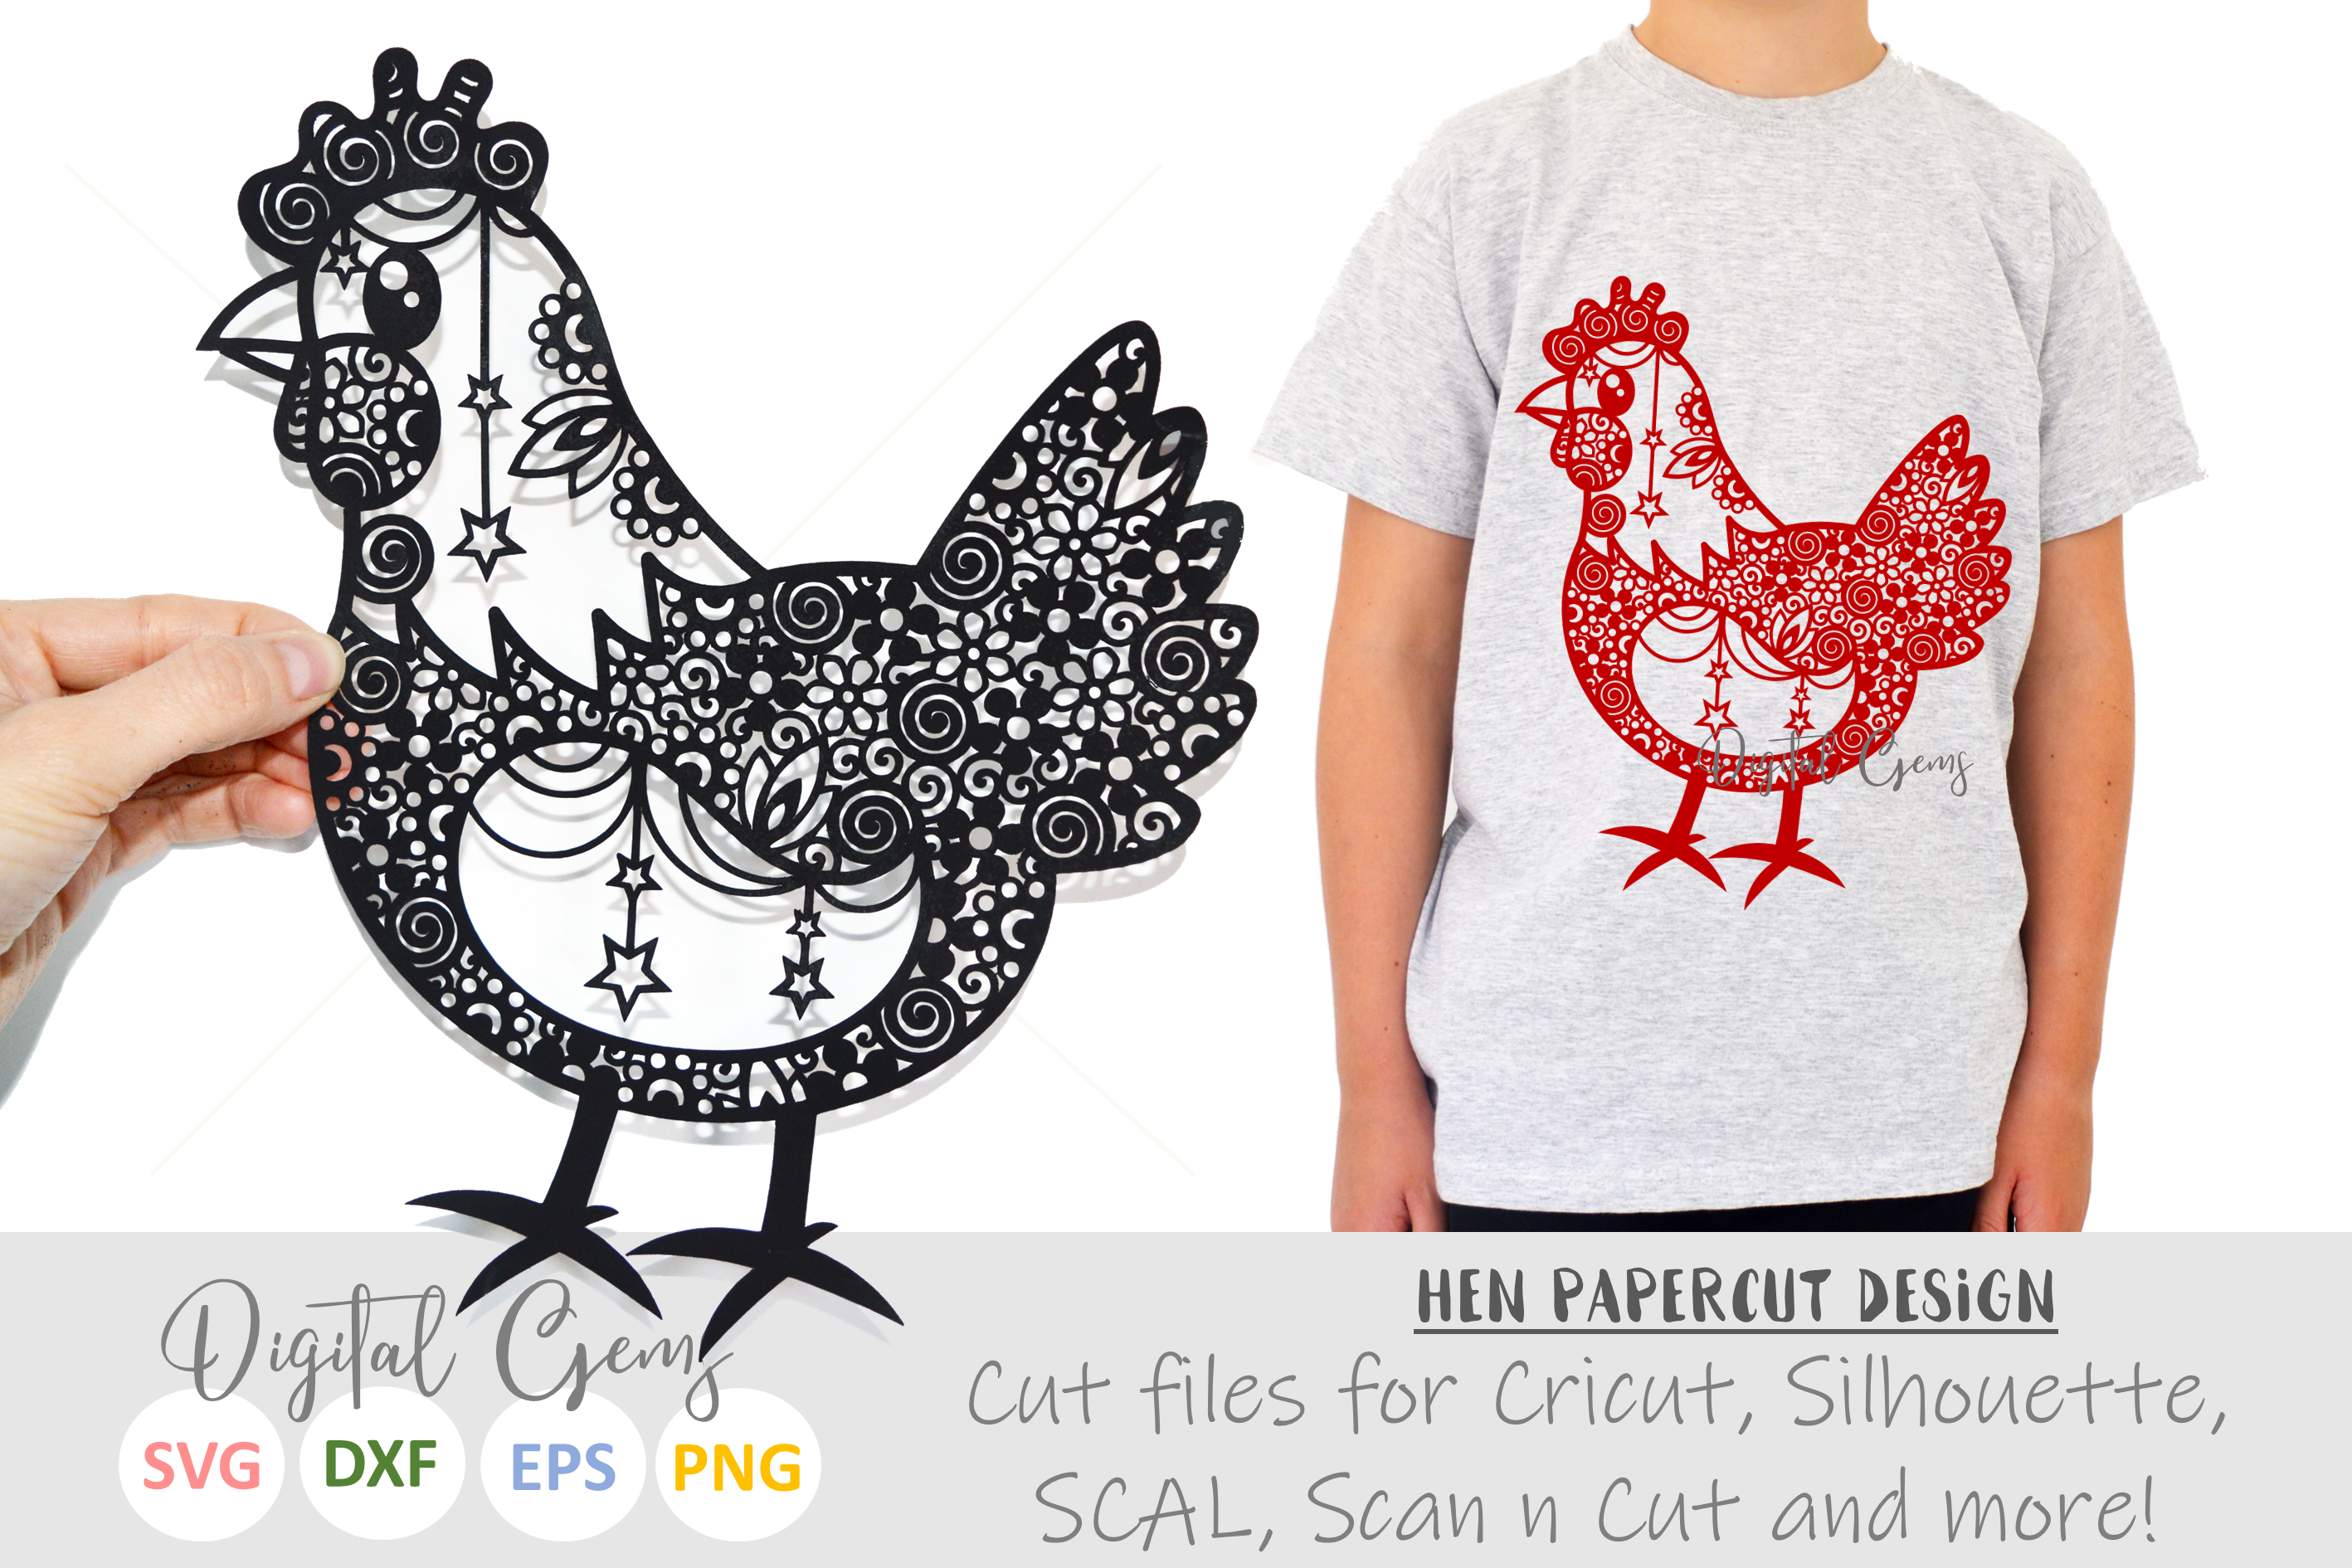 Download Chicken / Hen paper cut SVG / DXF / EPS files